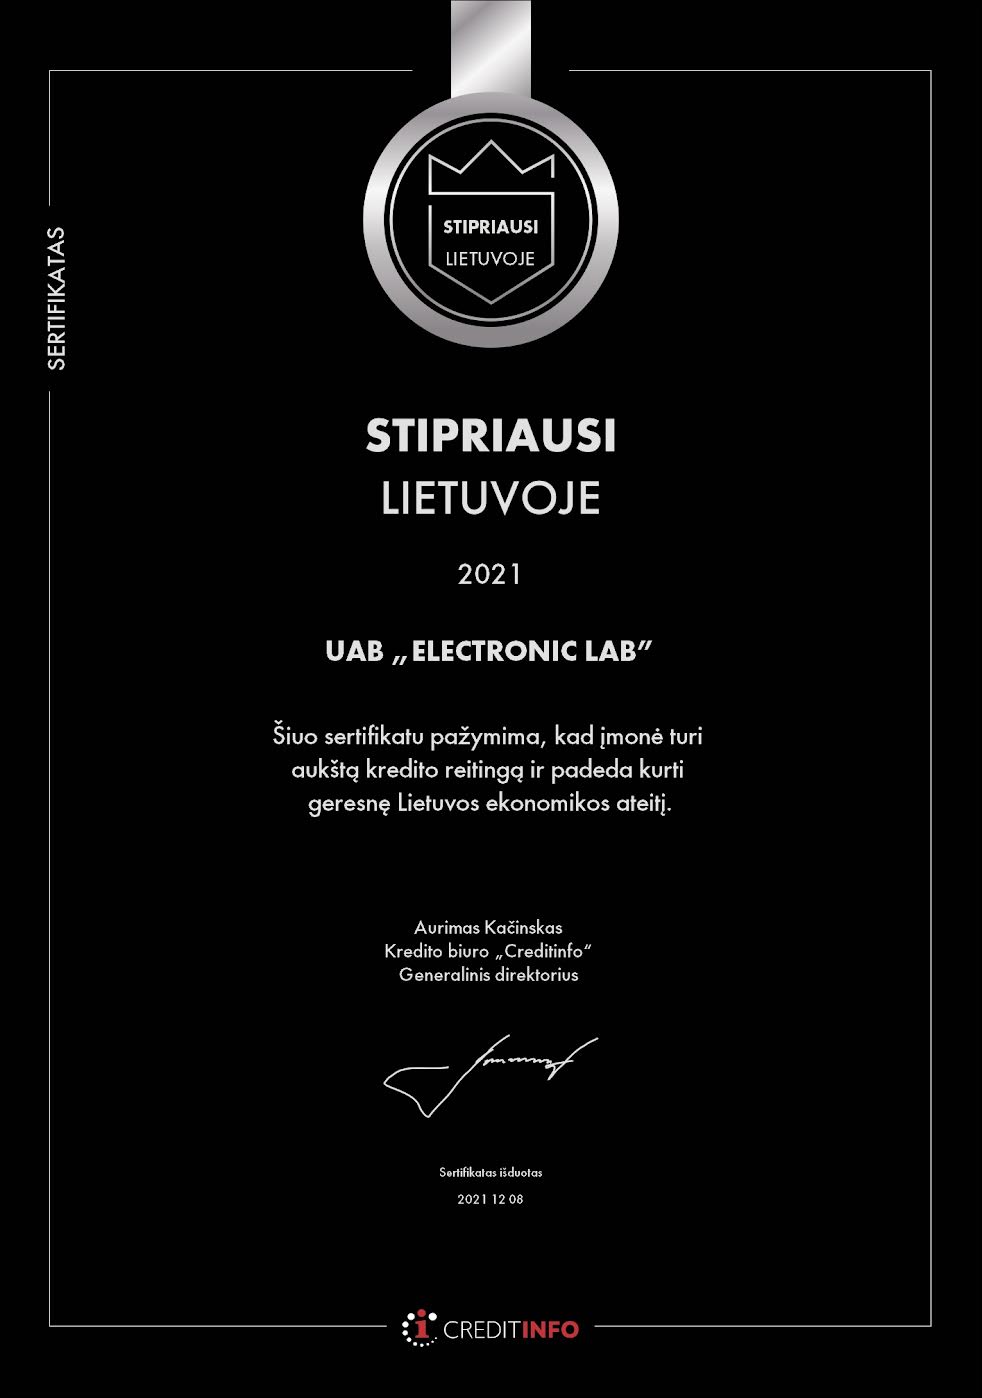 Stipriausi Lietuvoje e-Lab 2021